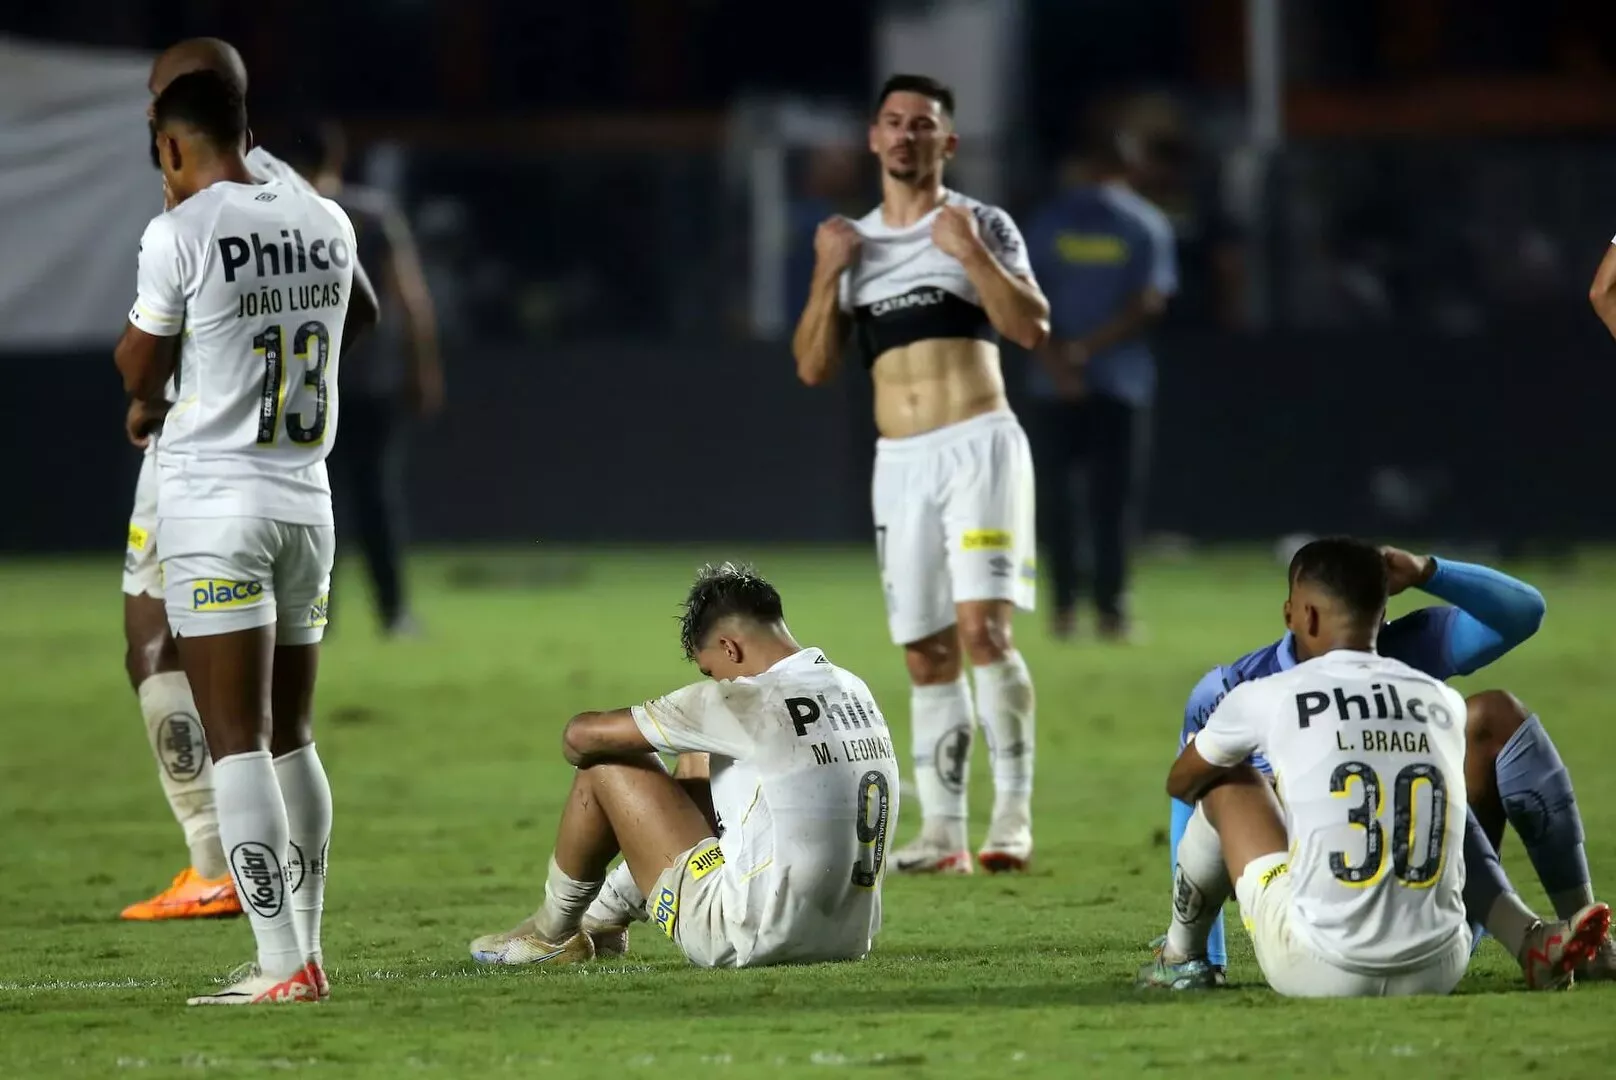 No Santos player will wear Pelé's No. 10 until the club returns to Serie A,  new club president says